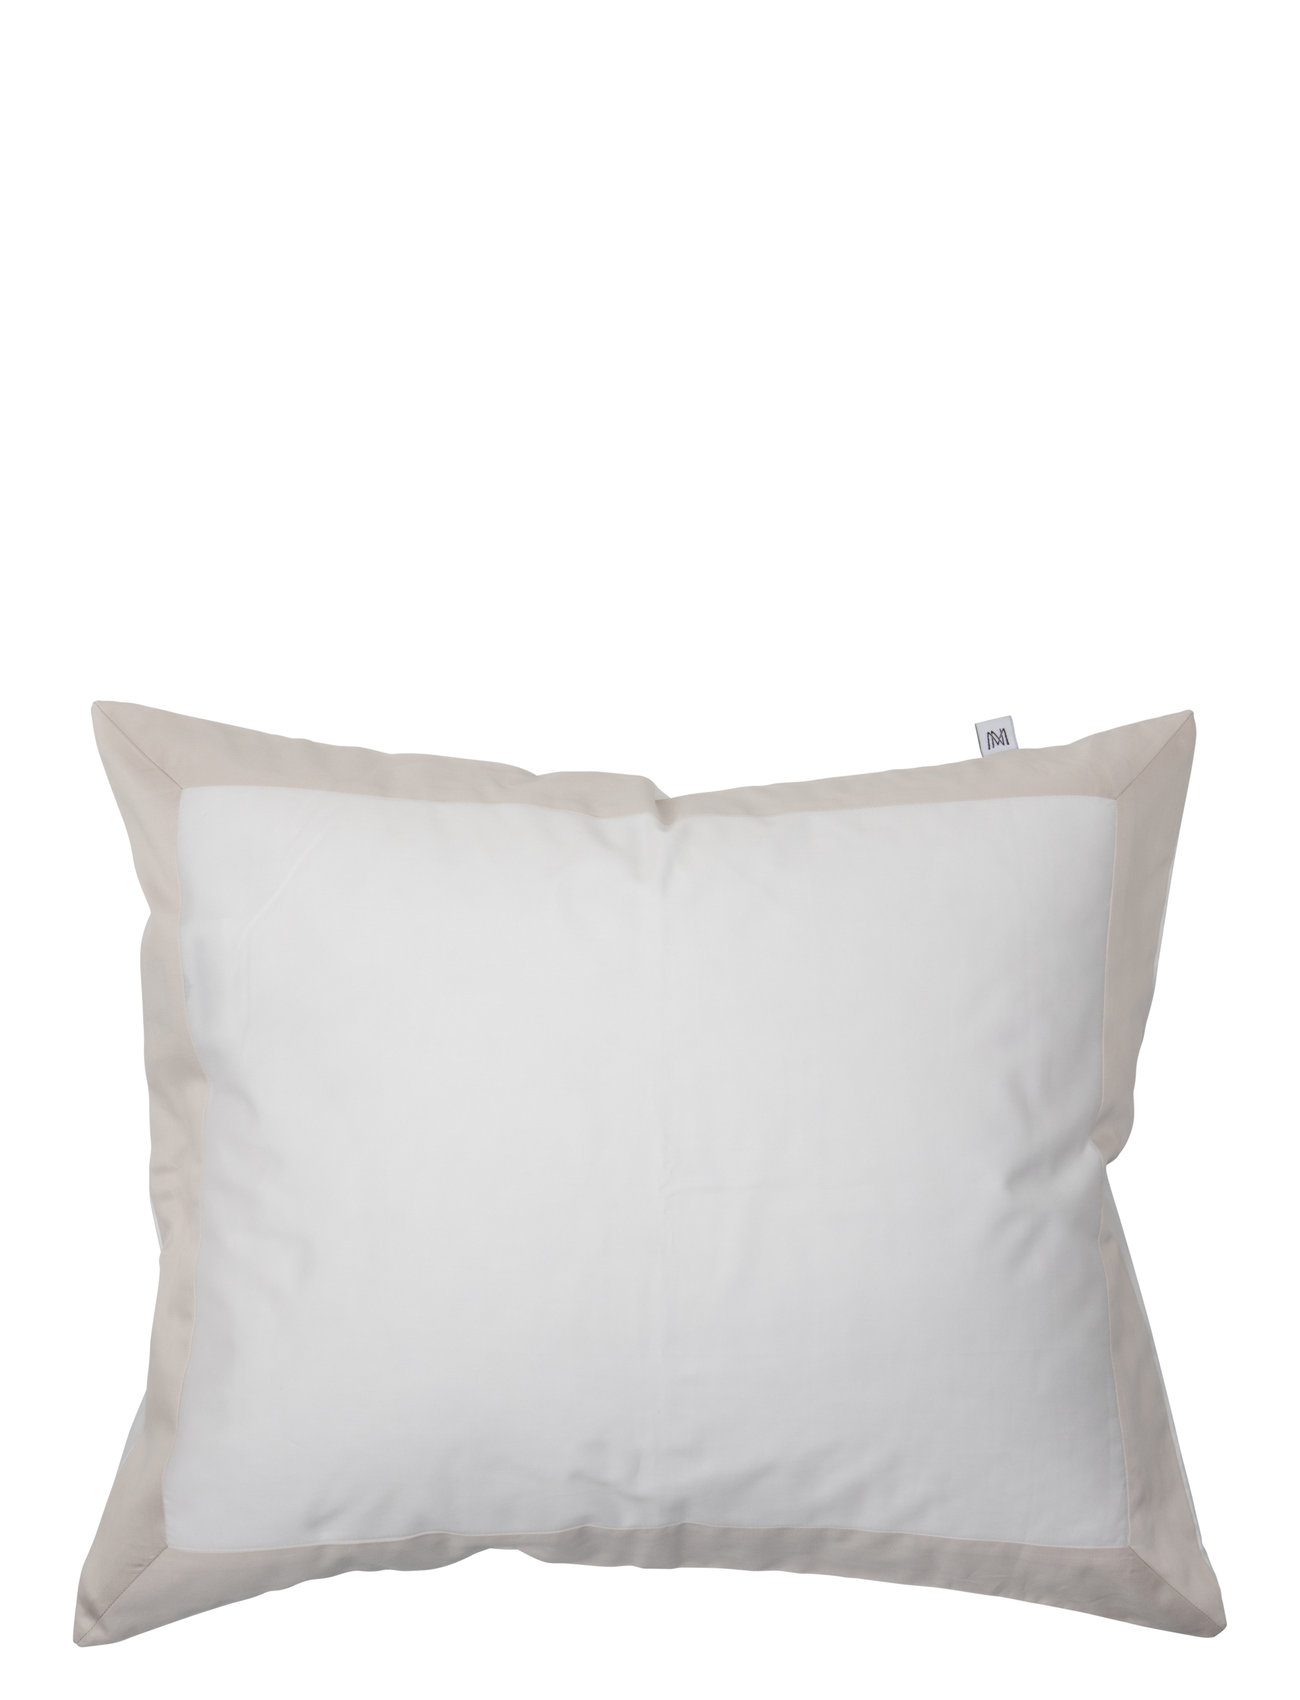 Mille Notti Sobrio Pillow Case Home Textiles Bedtextiles Pillow Cases Beige Mille Notti